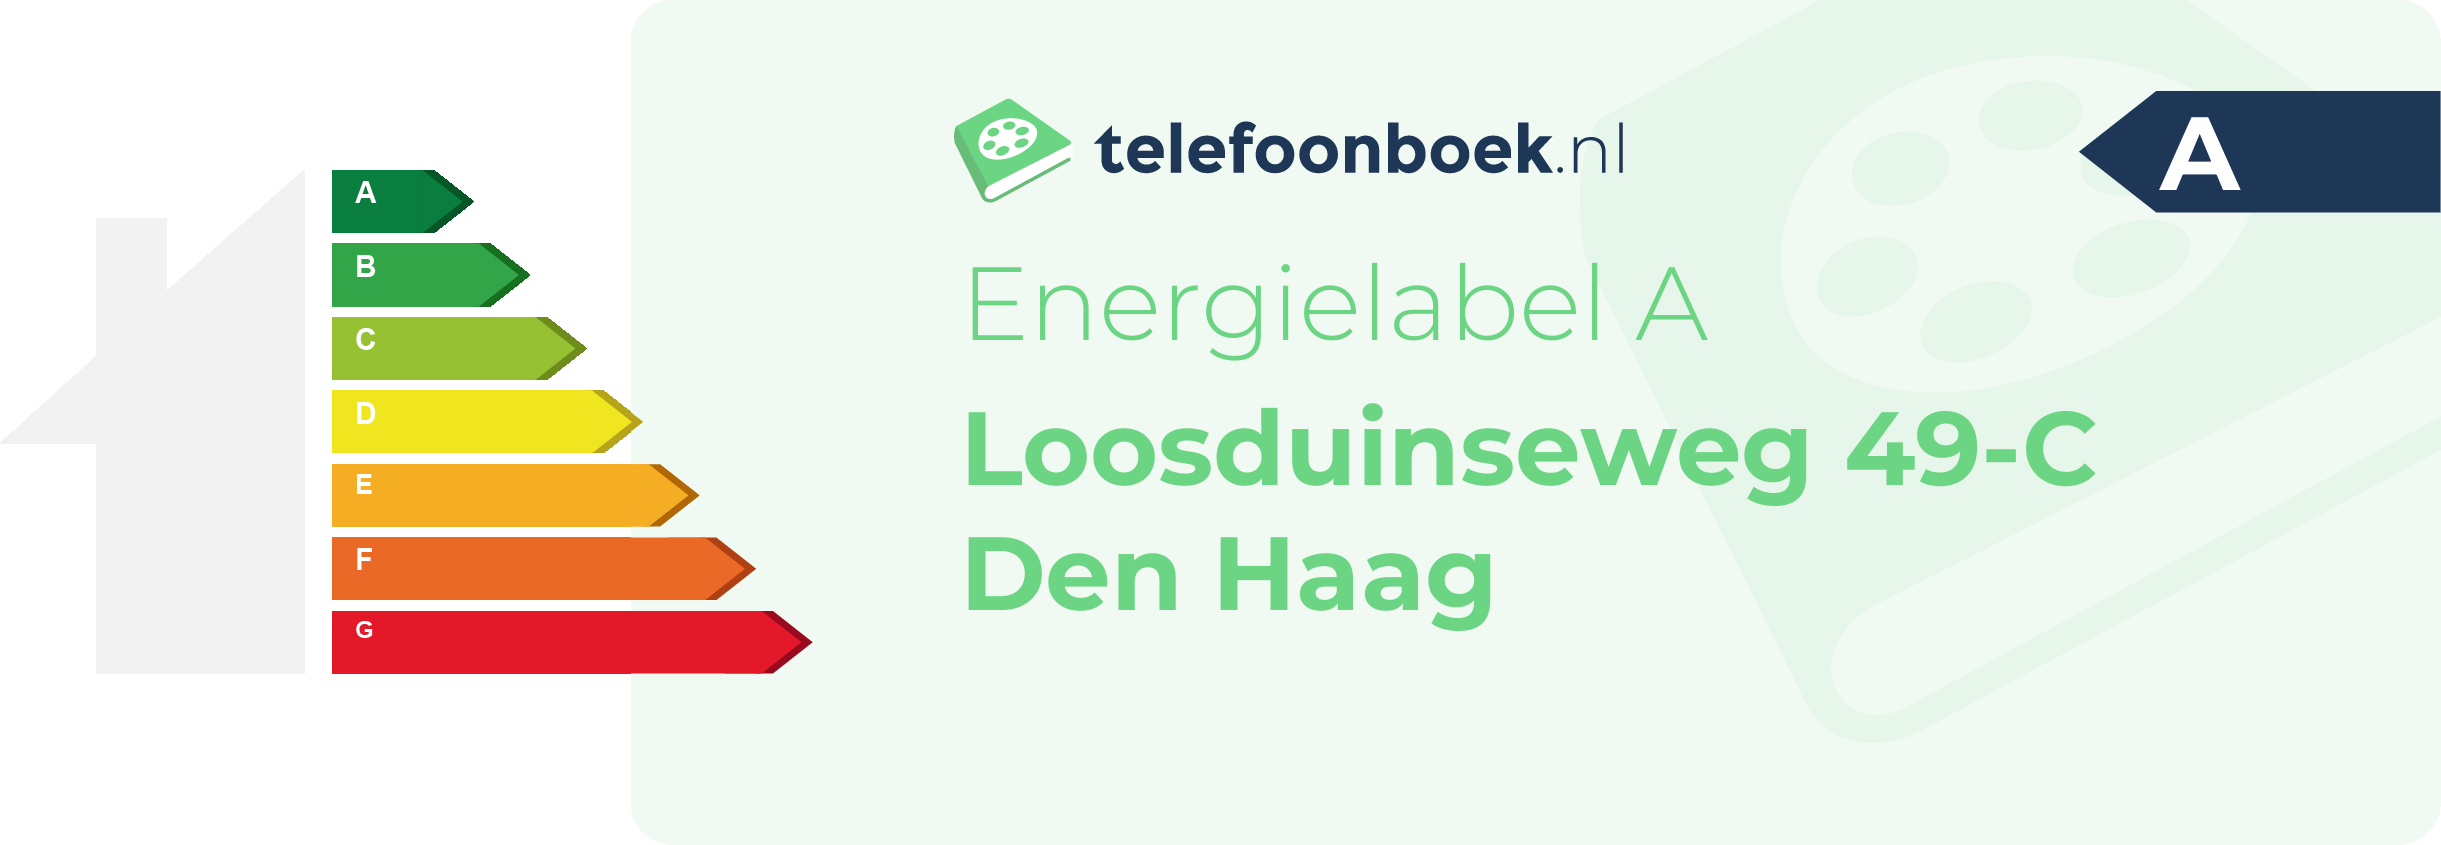 Energielabel Loosduinseweg 49-C Den Haag